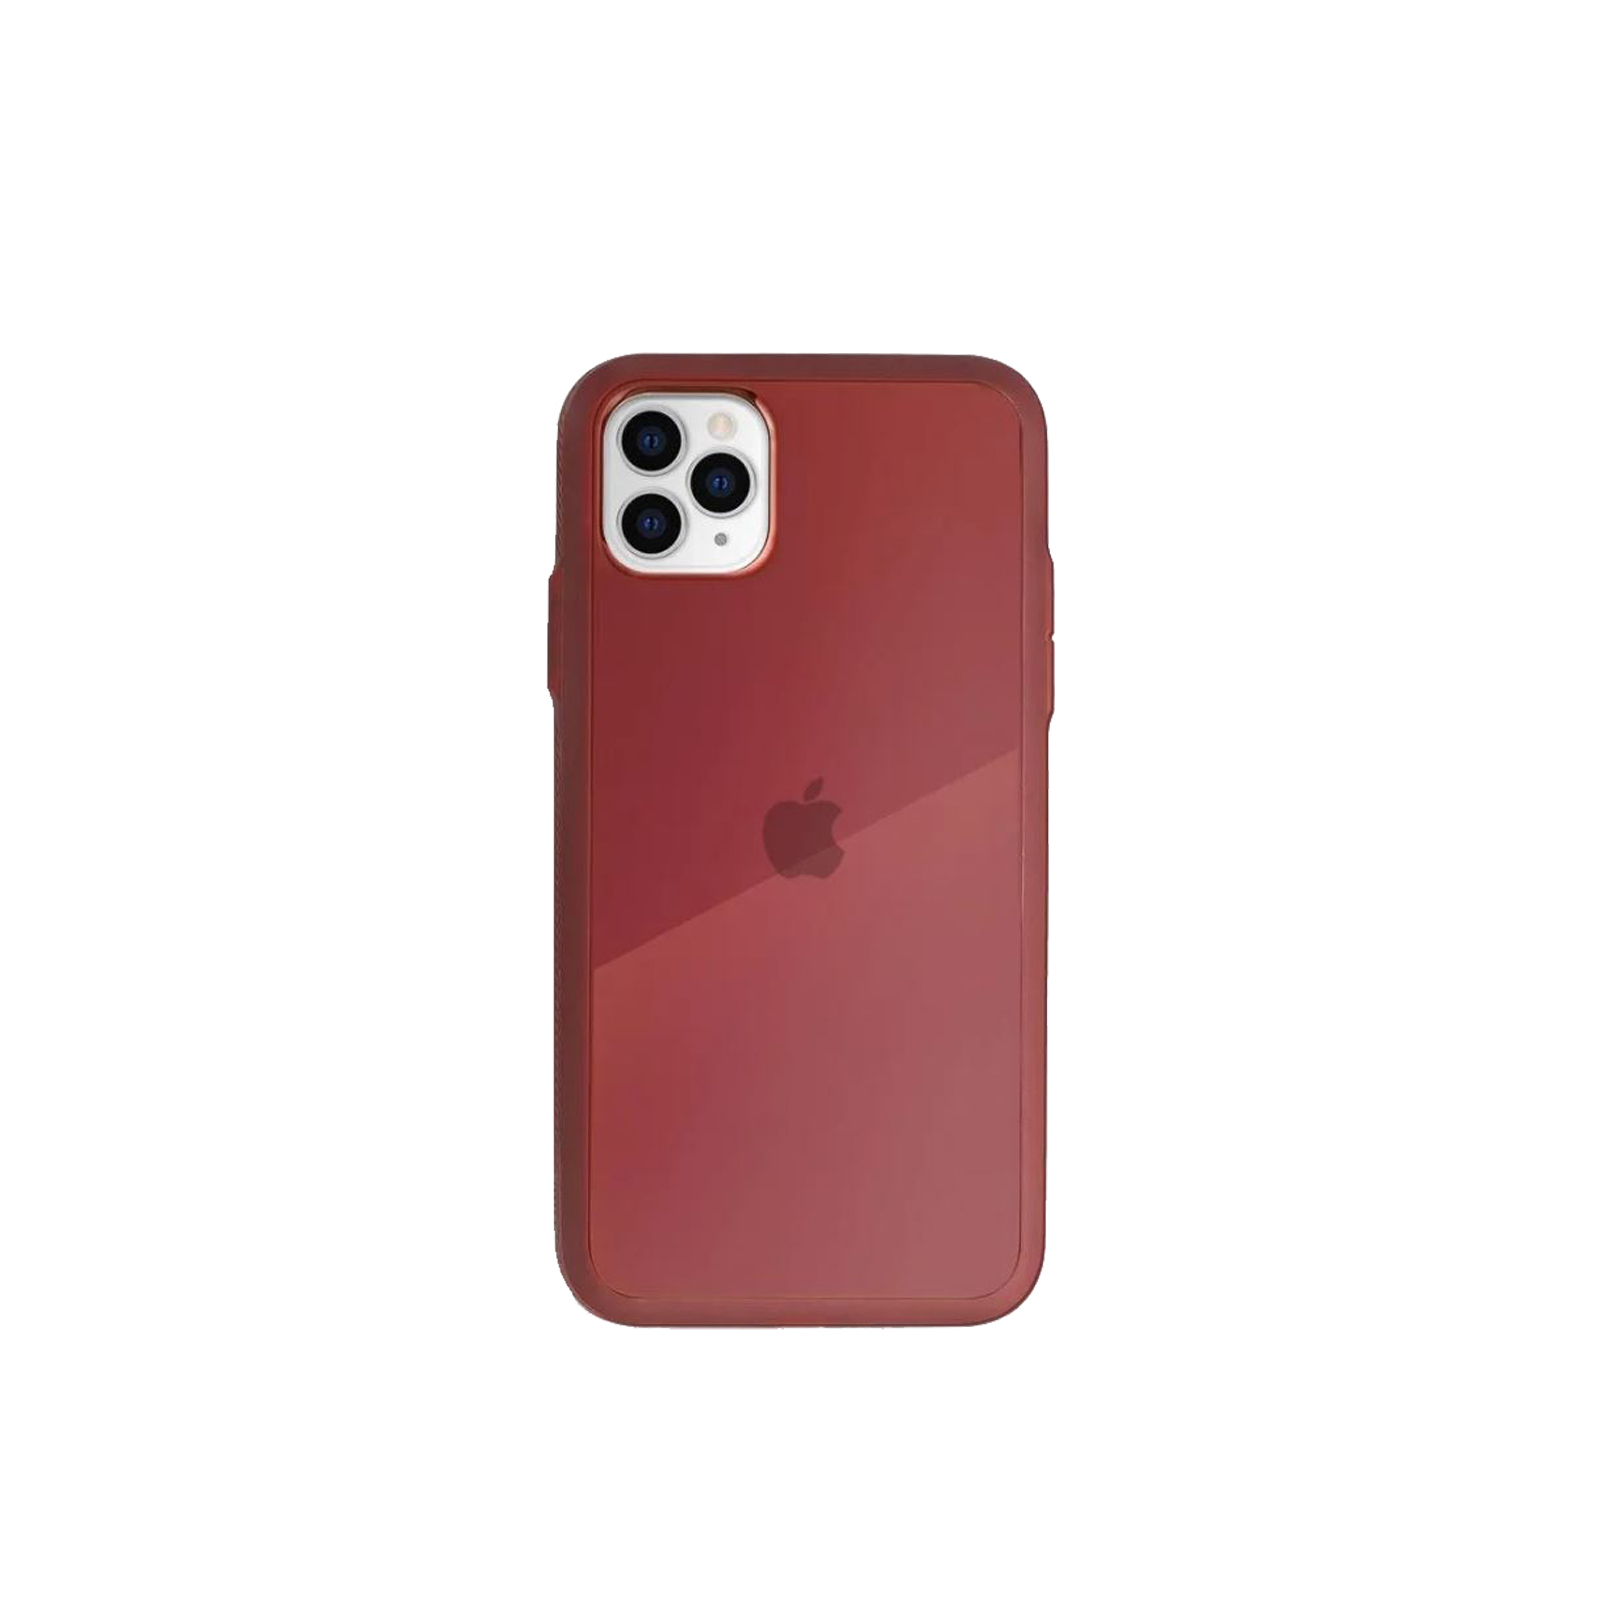 ParadigmS iPhone 11 Pro Max Case [Maroon]